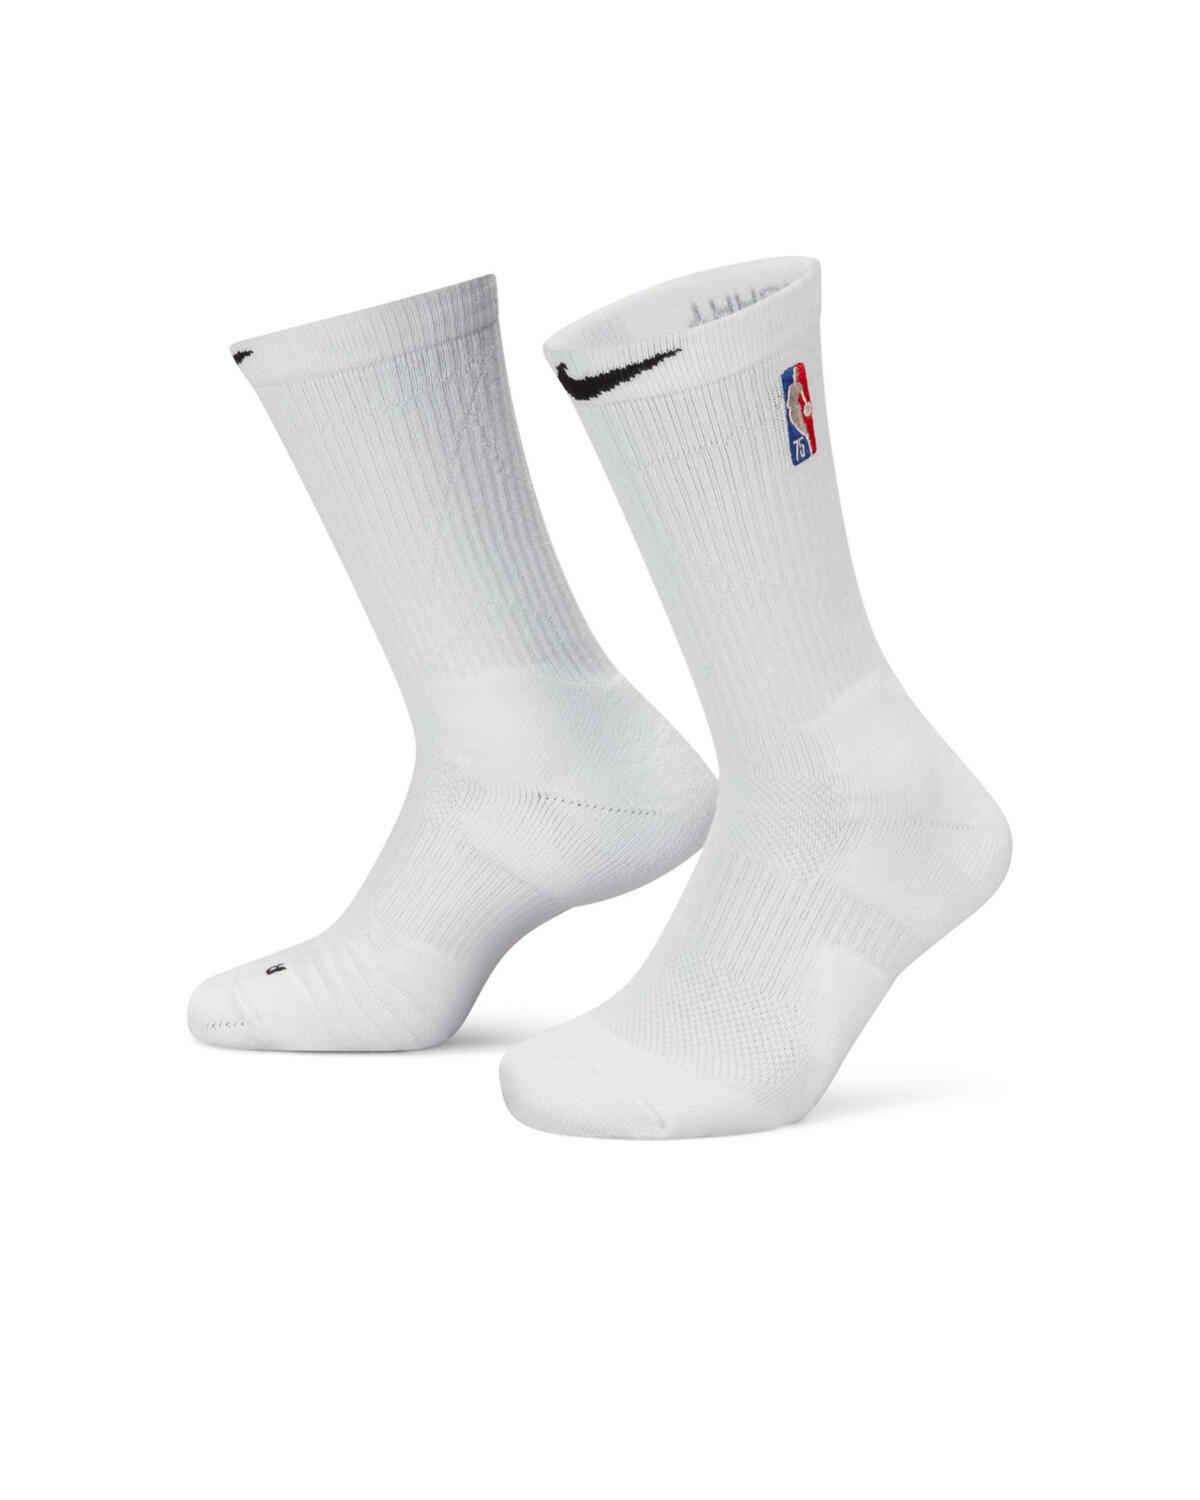 Ouderling energie Inwoner Nike Elite NBA Crew Socks | DA4960-100 | AFEW STORE